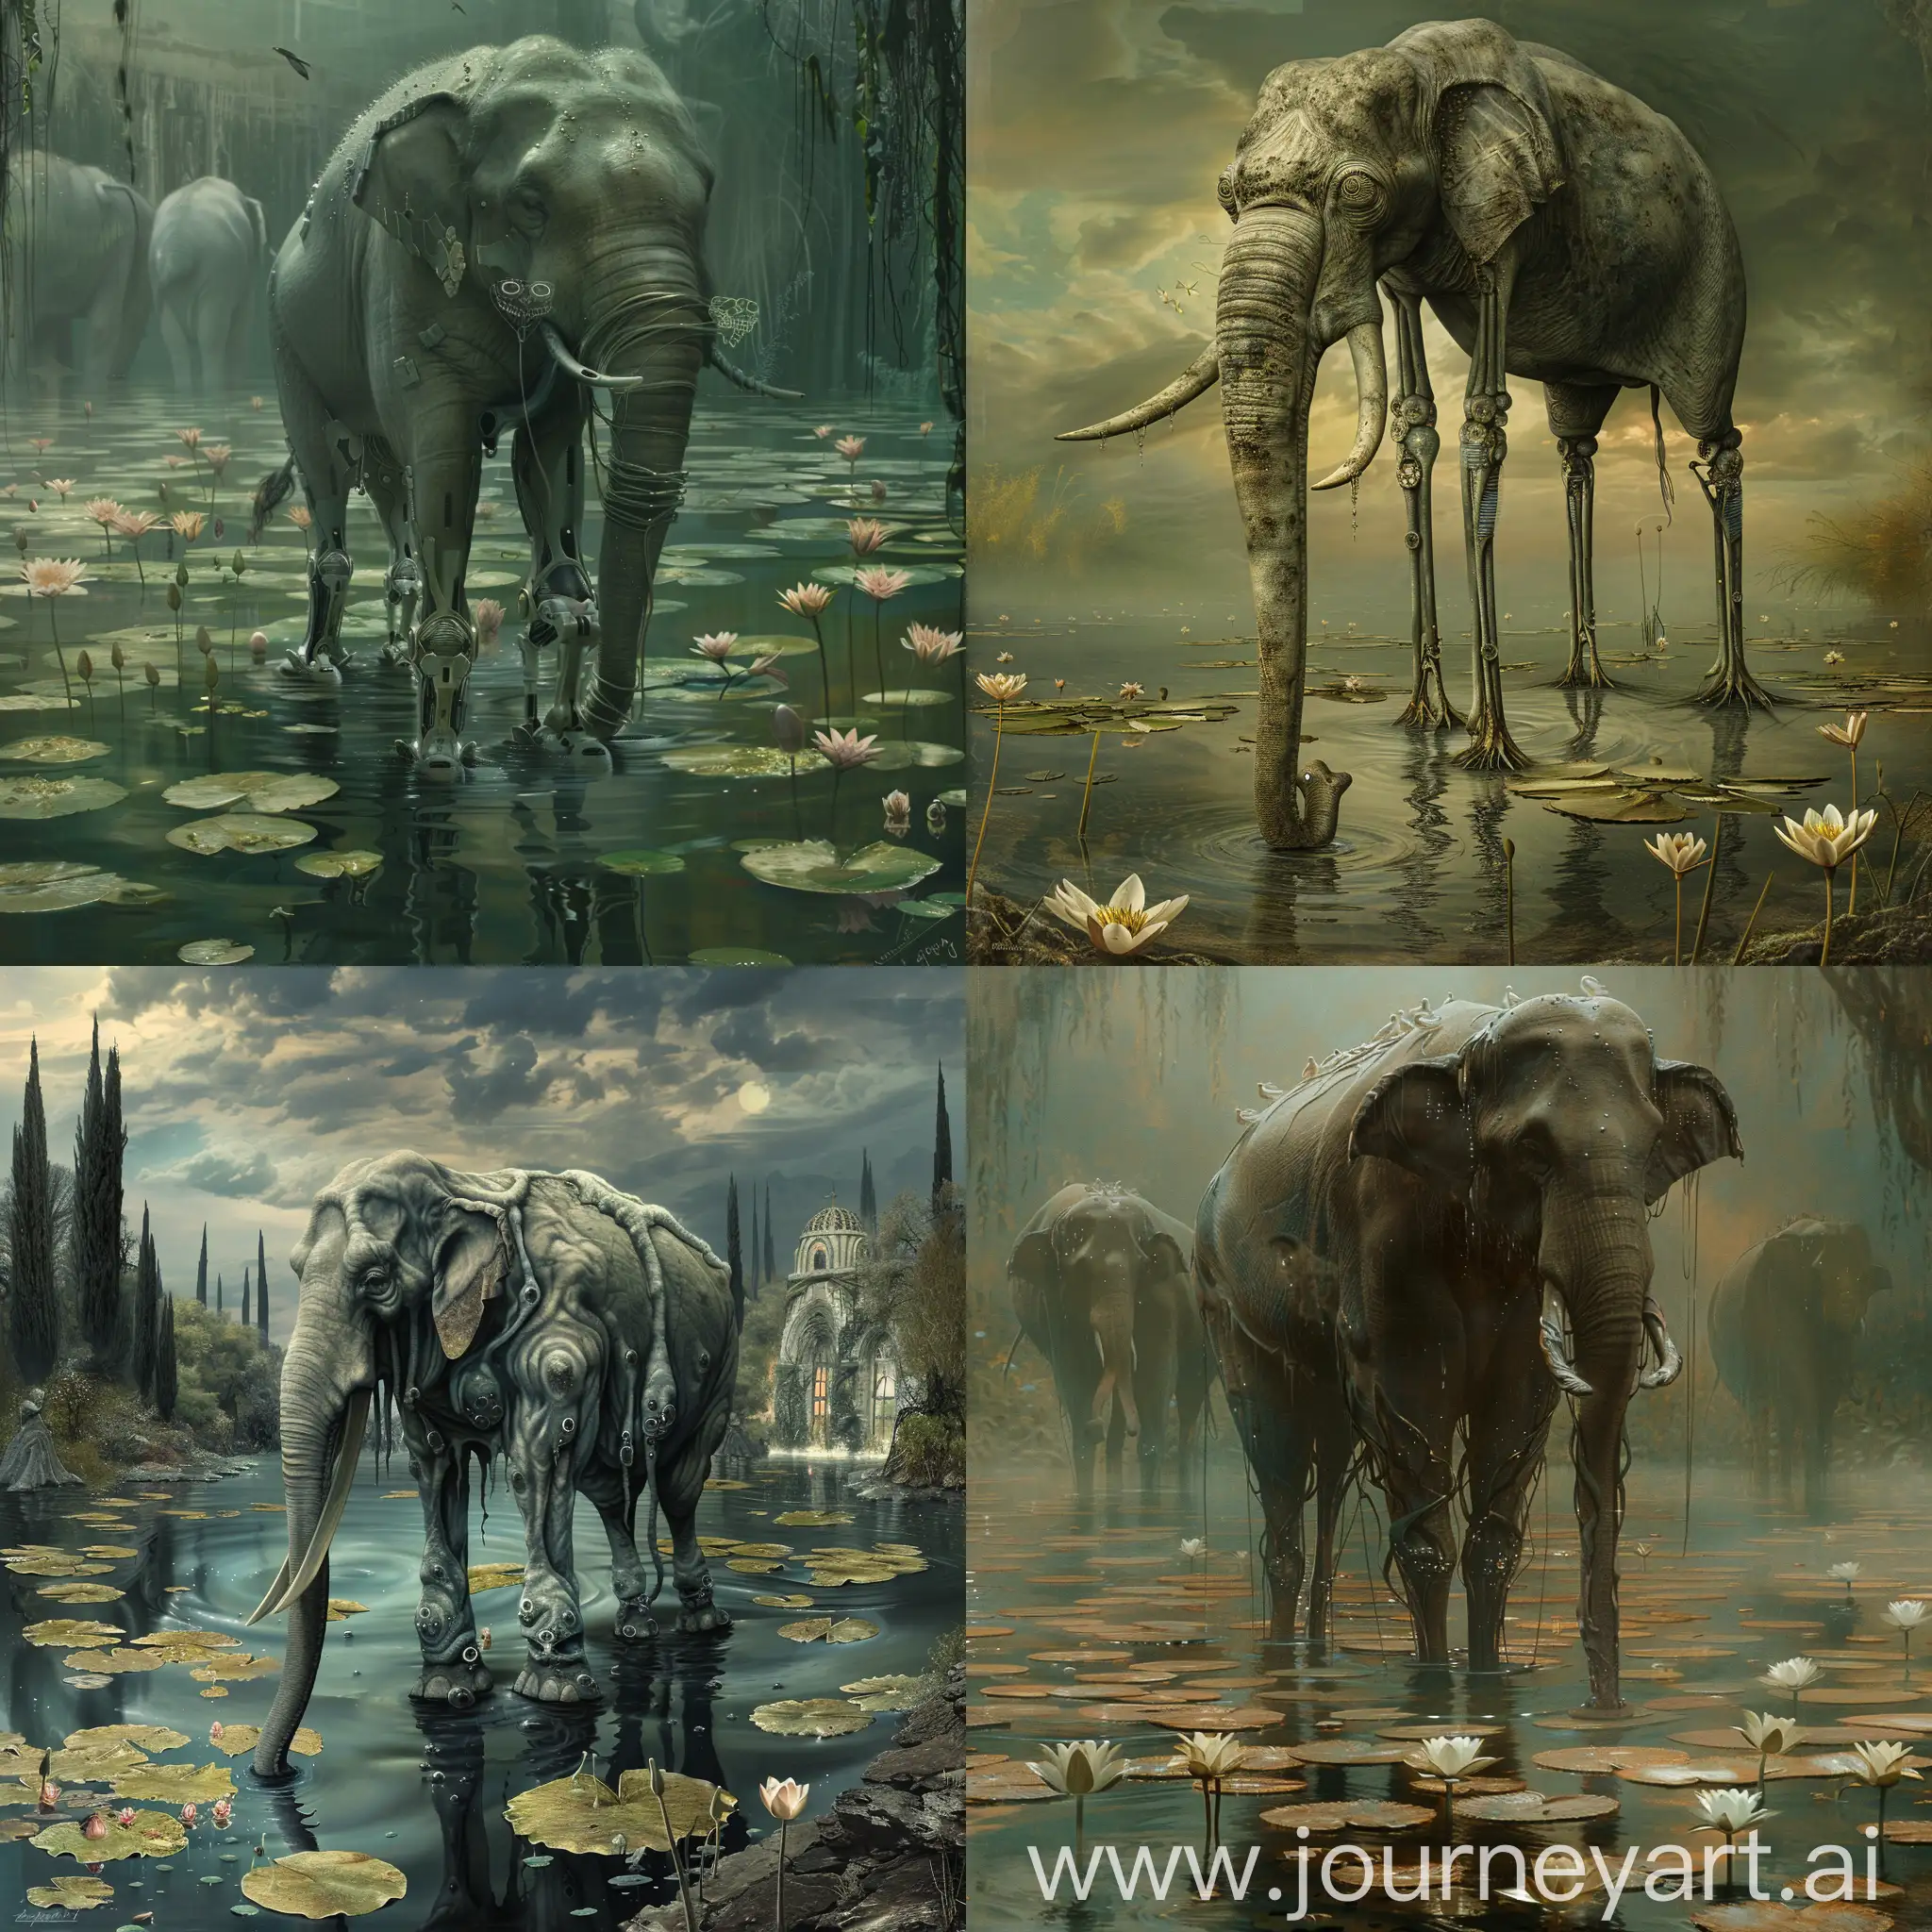 Surreal-Cyberpunk-Wildlife-Salvador-DalInspired-Elephants-in-Monets-Dreamy-Cybernetic-Oasis